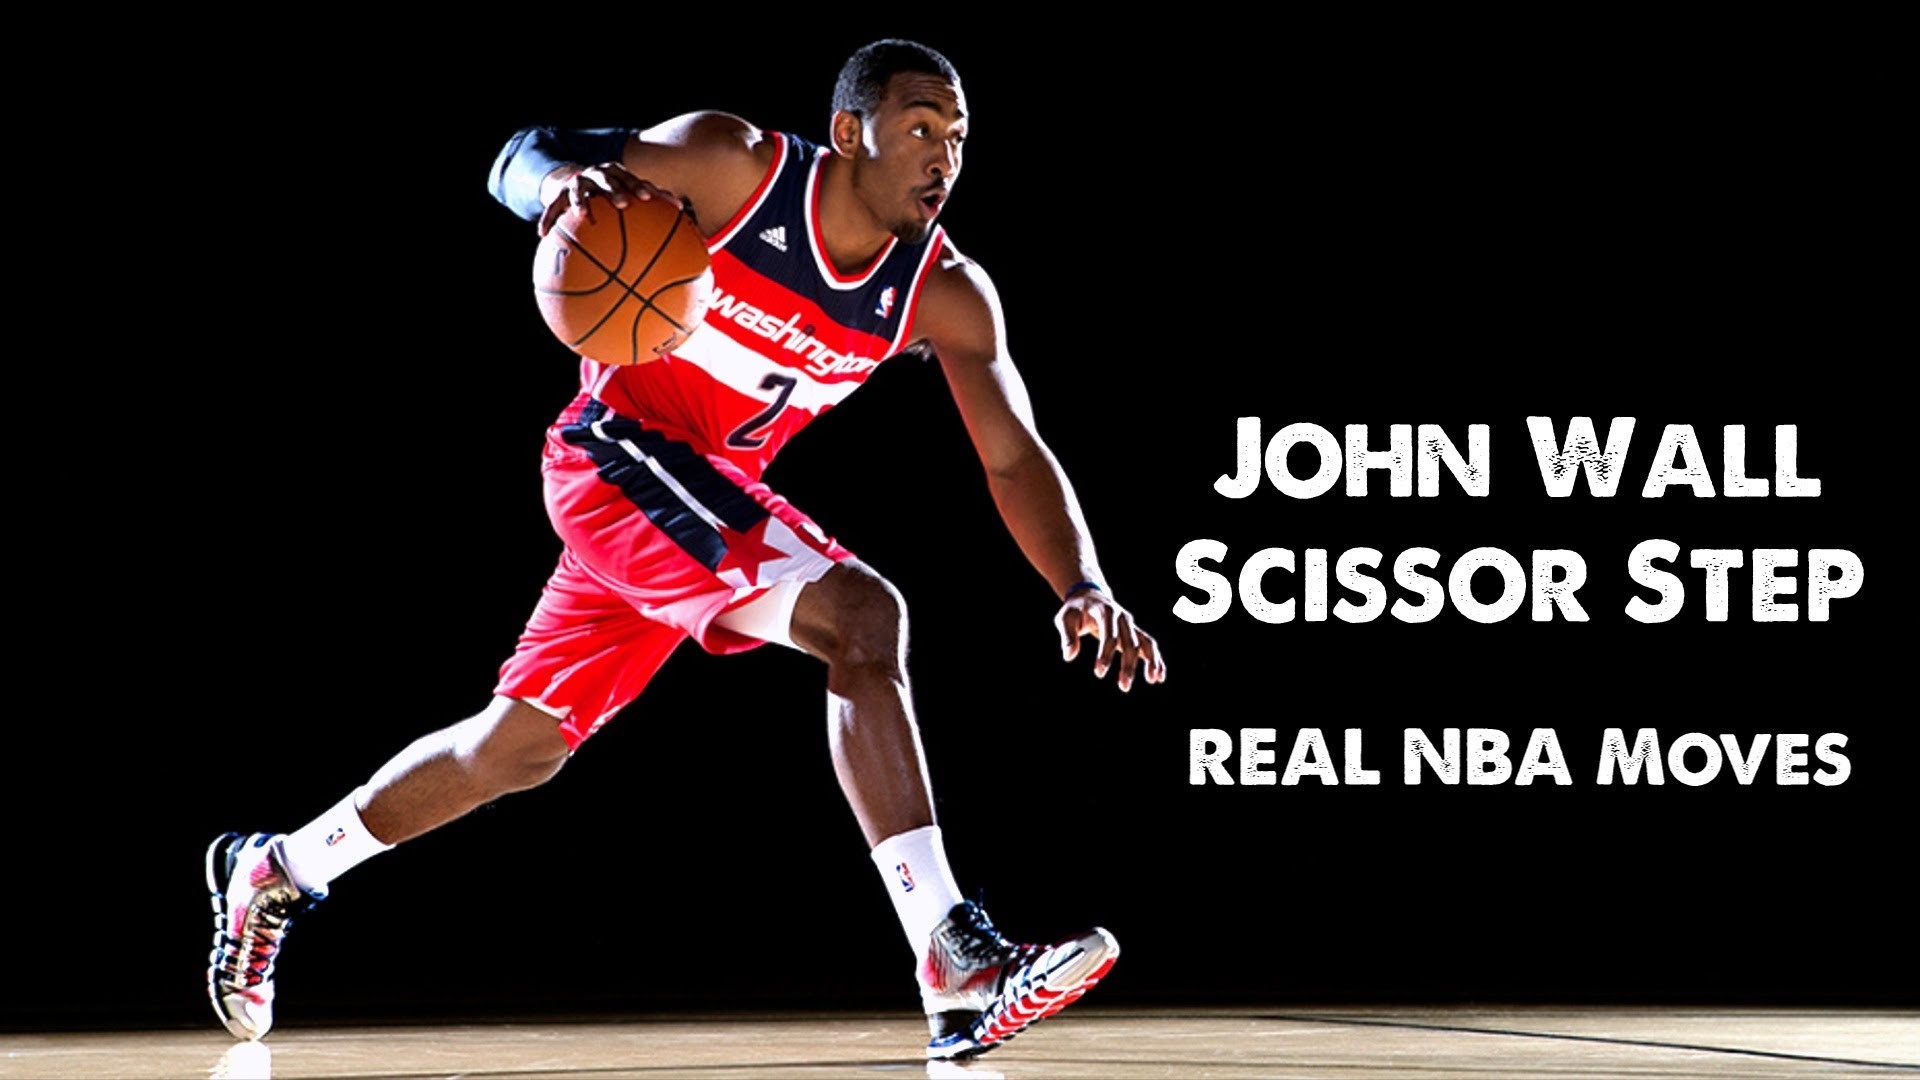 Real NBA Moves: John Wall Scissor Step (featuring Zach LaVine)